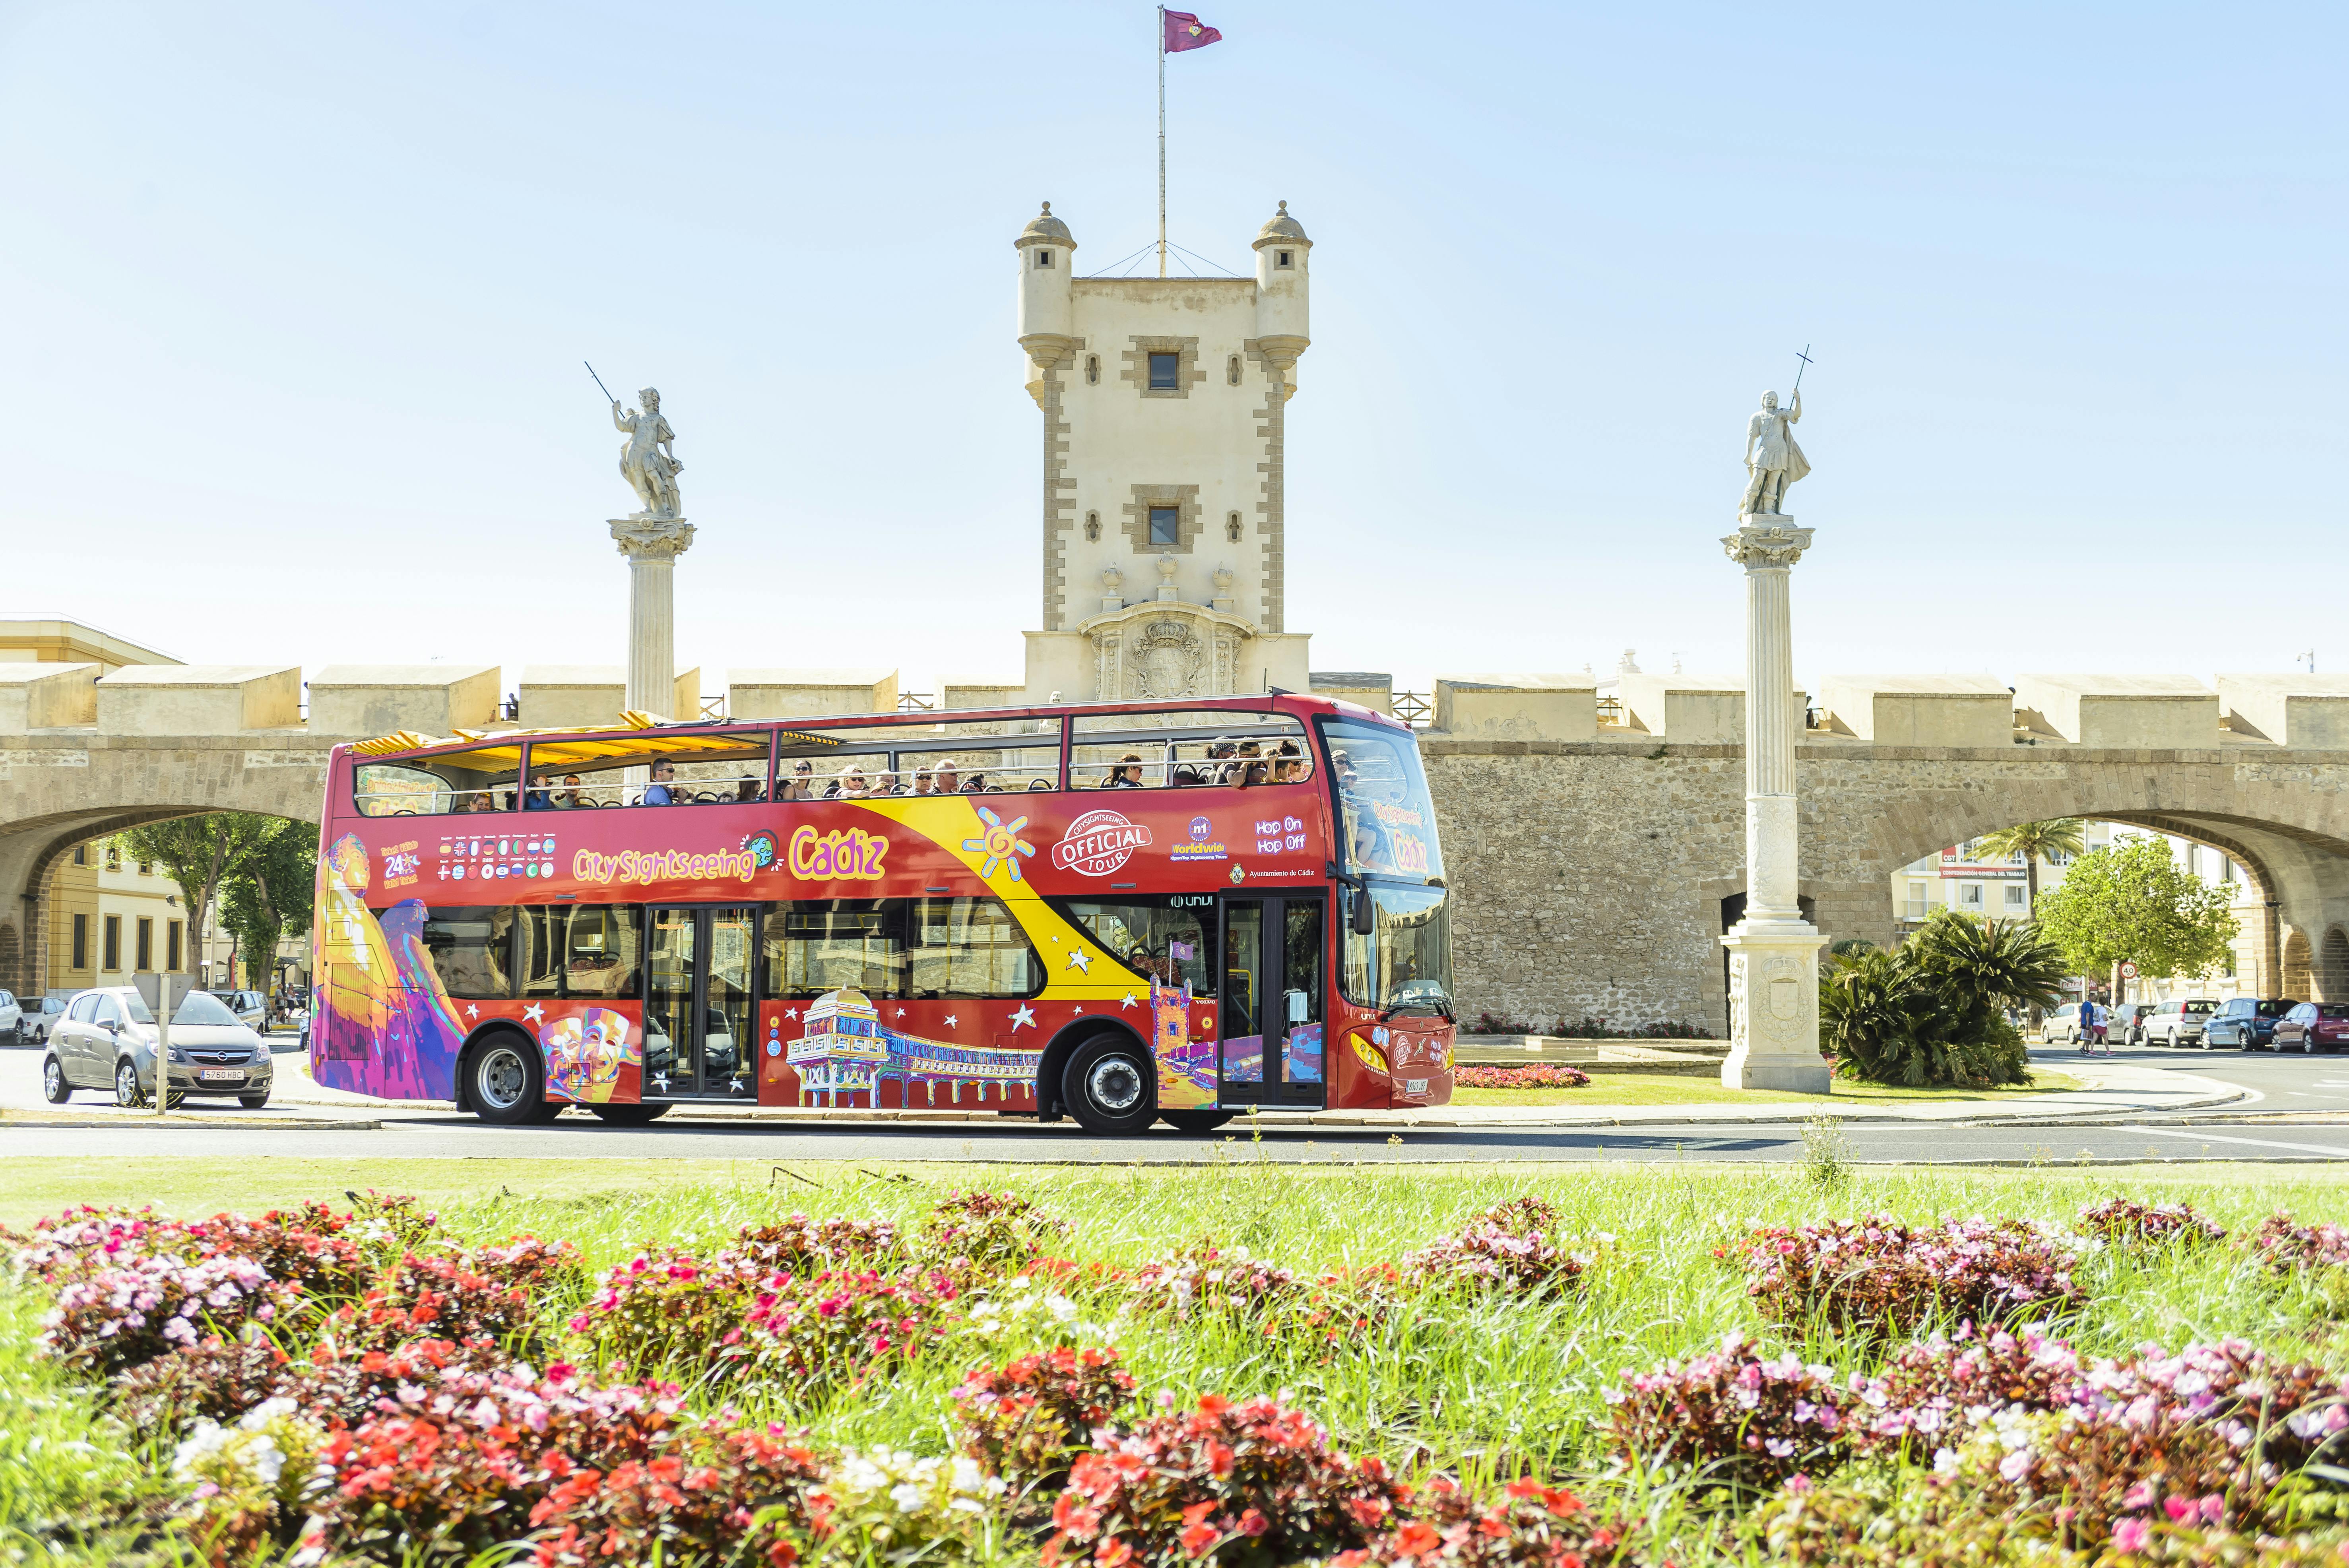 Stadtrundfahrt mit dem Hop-on-Hop-off-Bus durch Cádiz